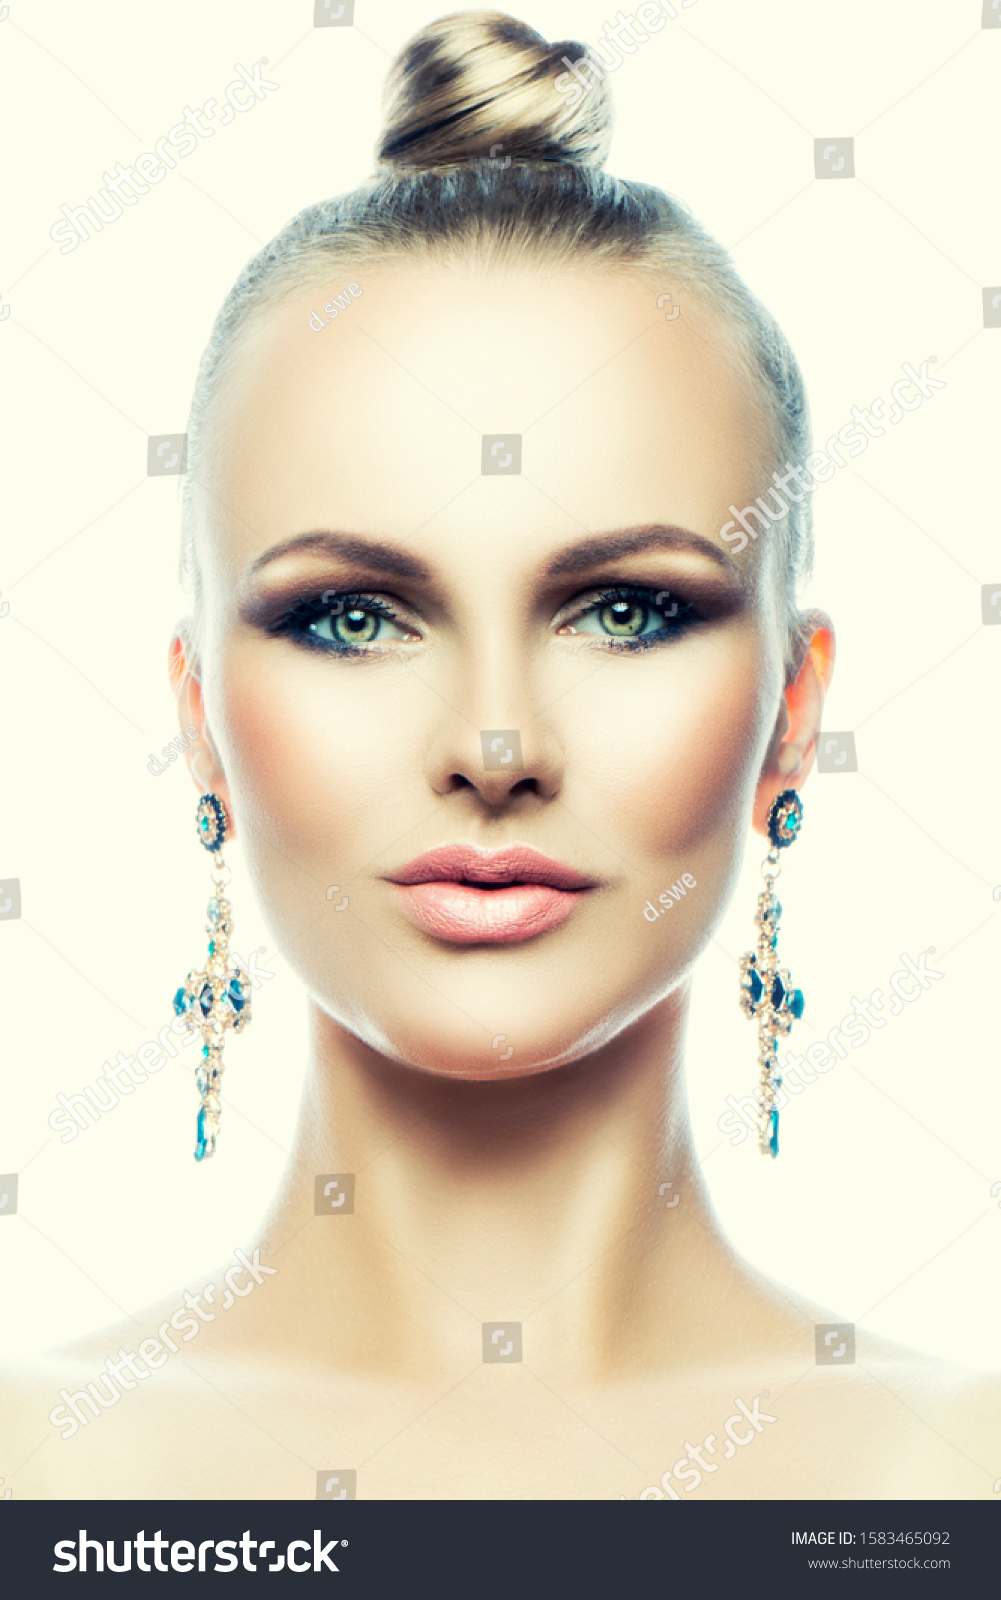 Beauty fashion model woman close-up studio portrait. Perfect skin, bright eye shadow make-up, jinny hair style, jewelry earrings.  #1583465092